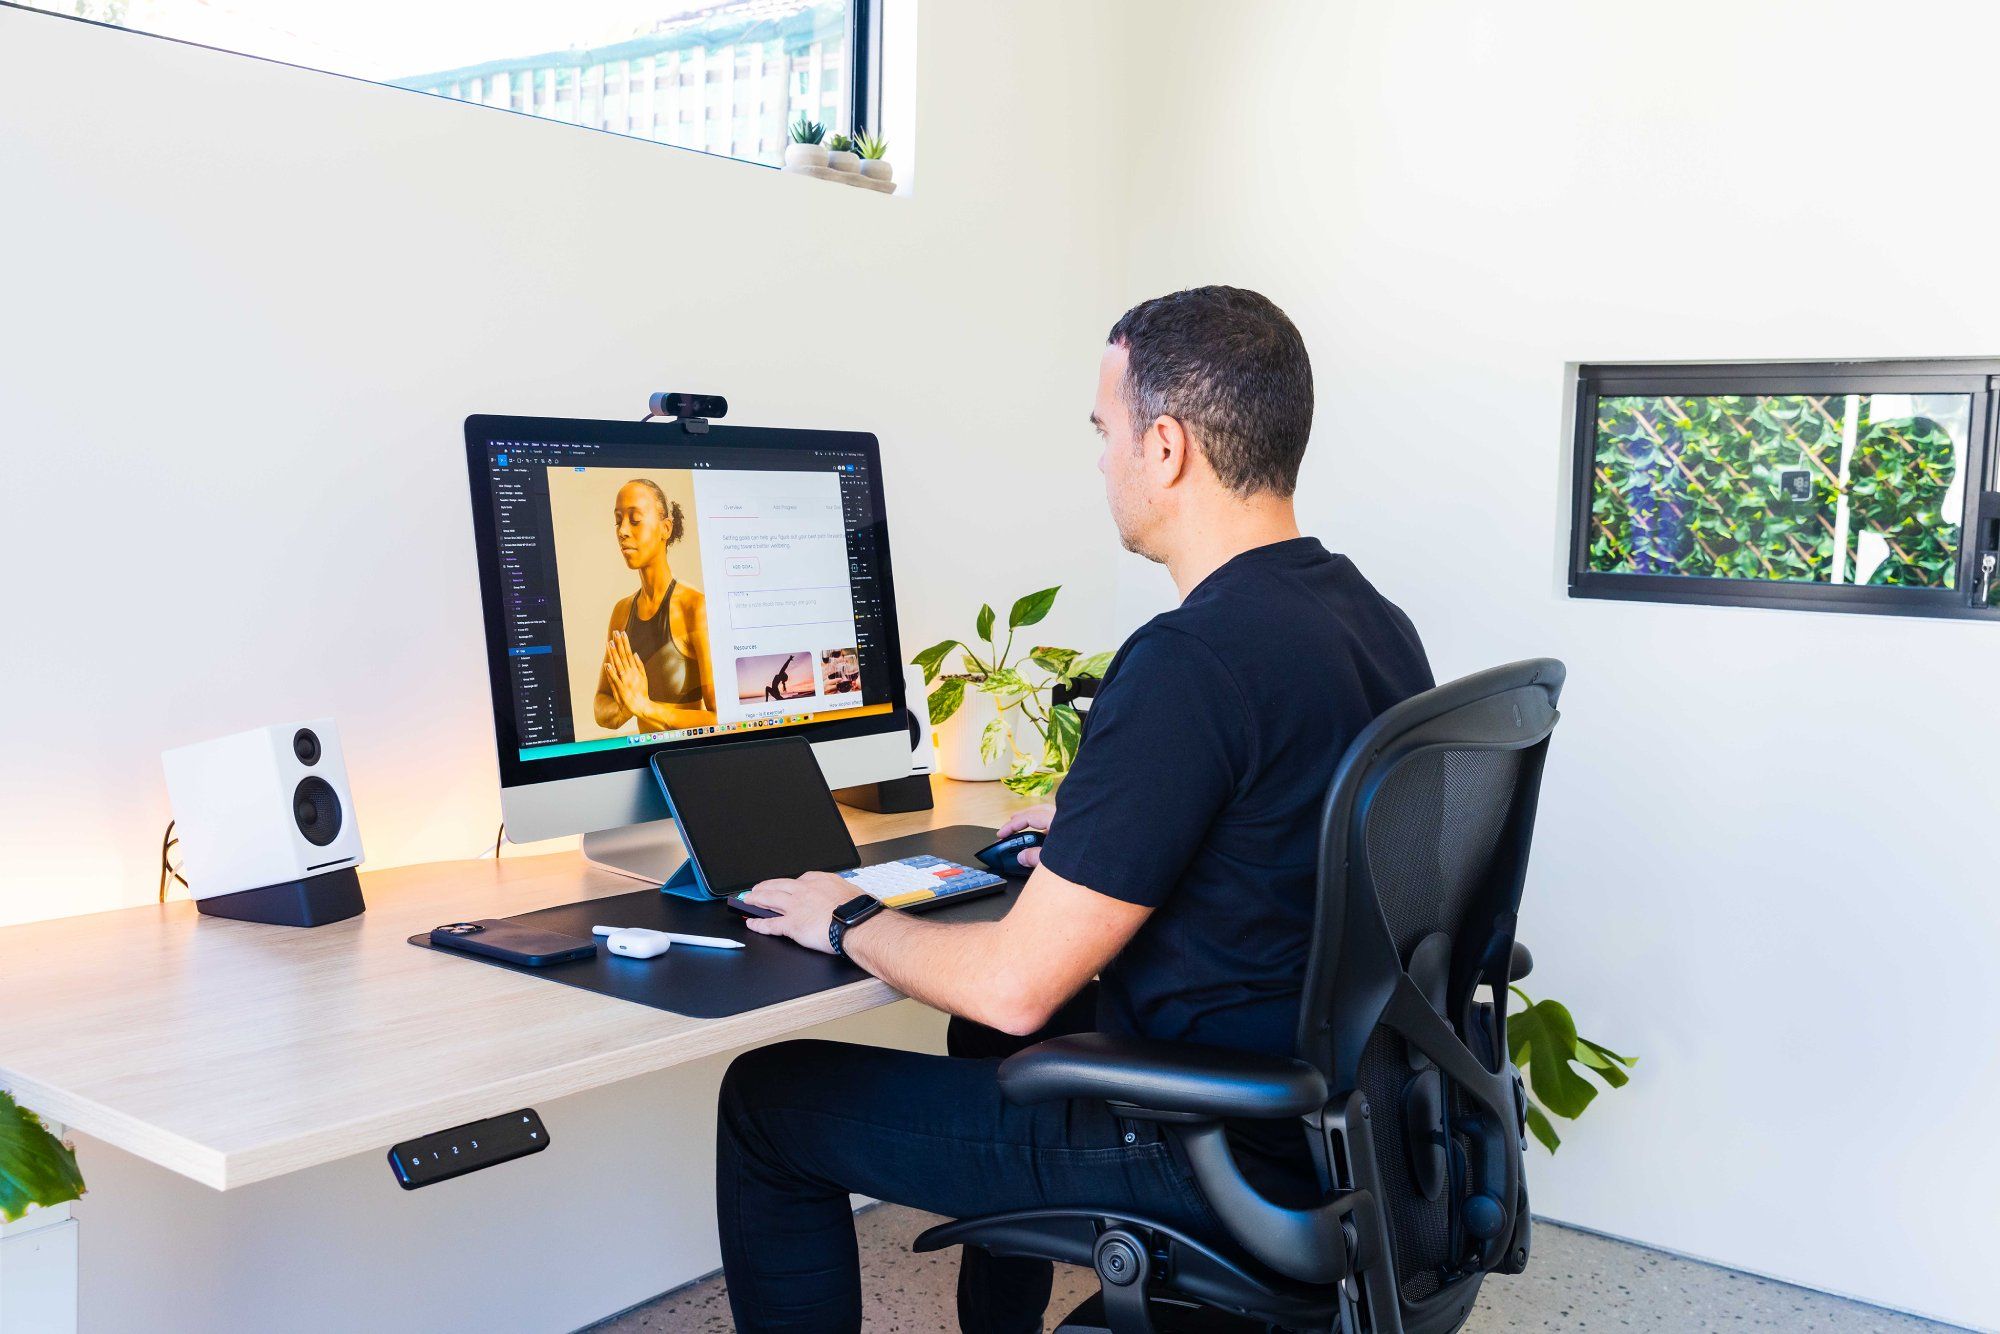 Petar Ceklic, a freelance UX/UI designer, in his garden home office in Australia